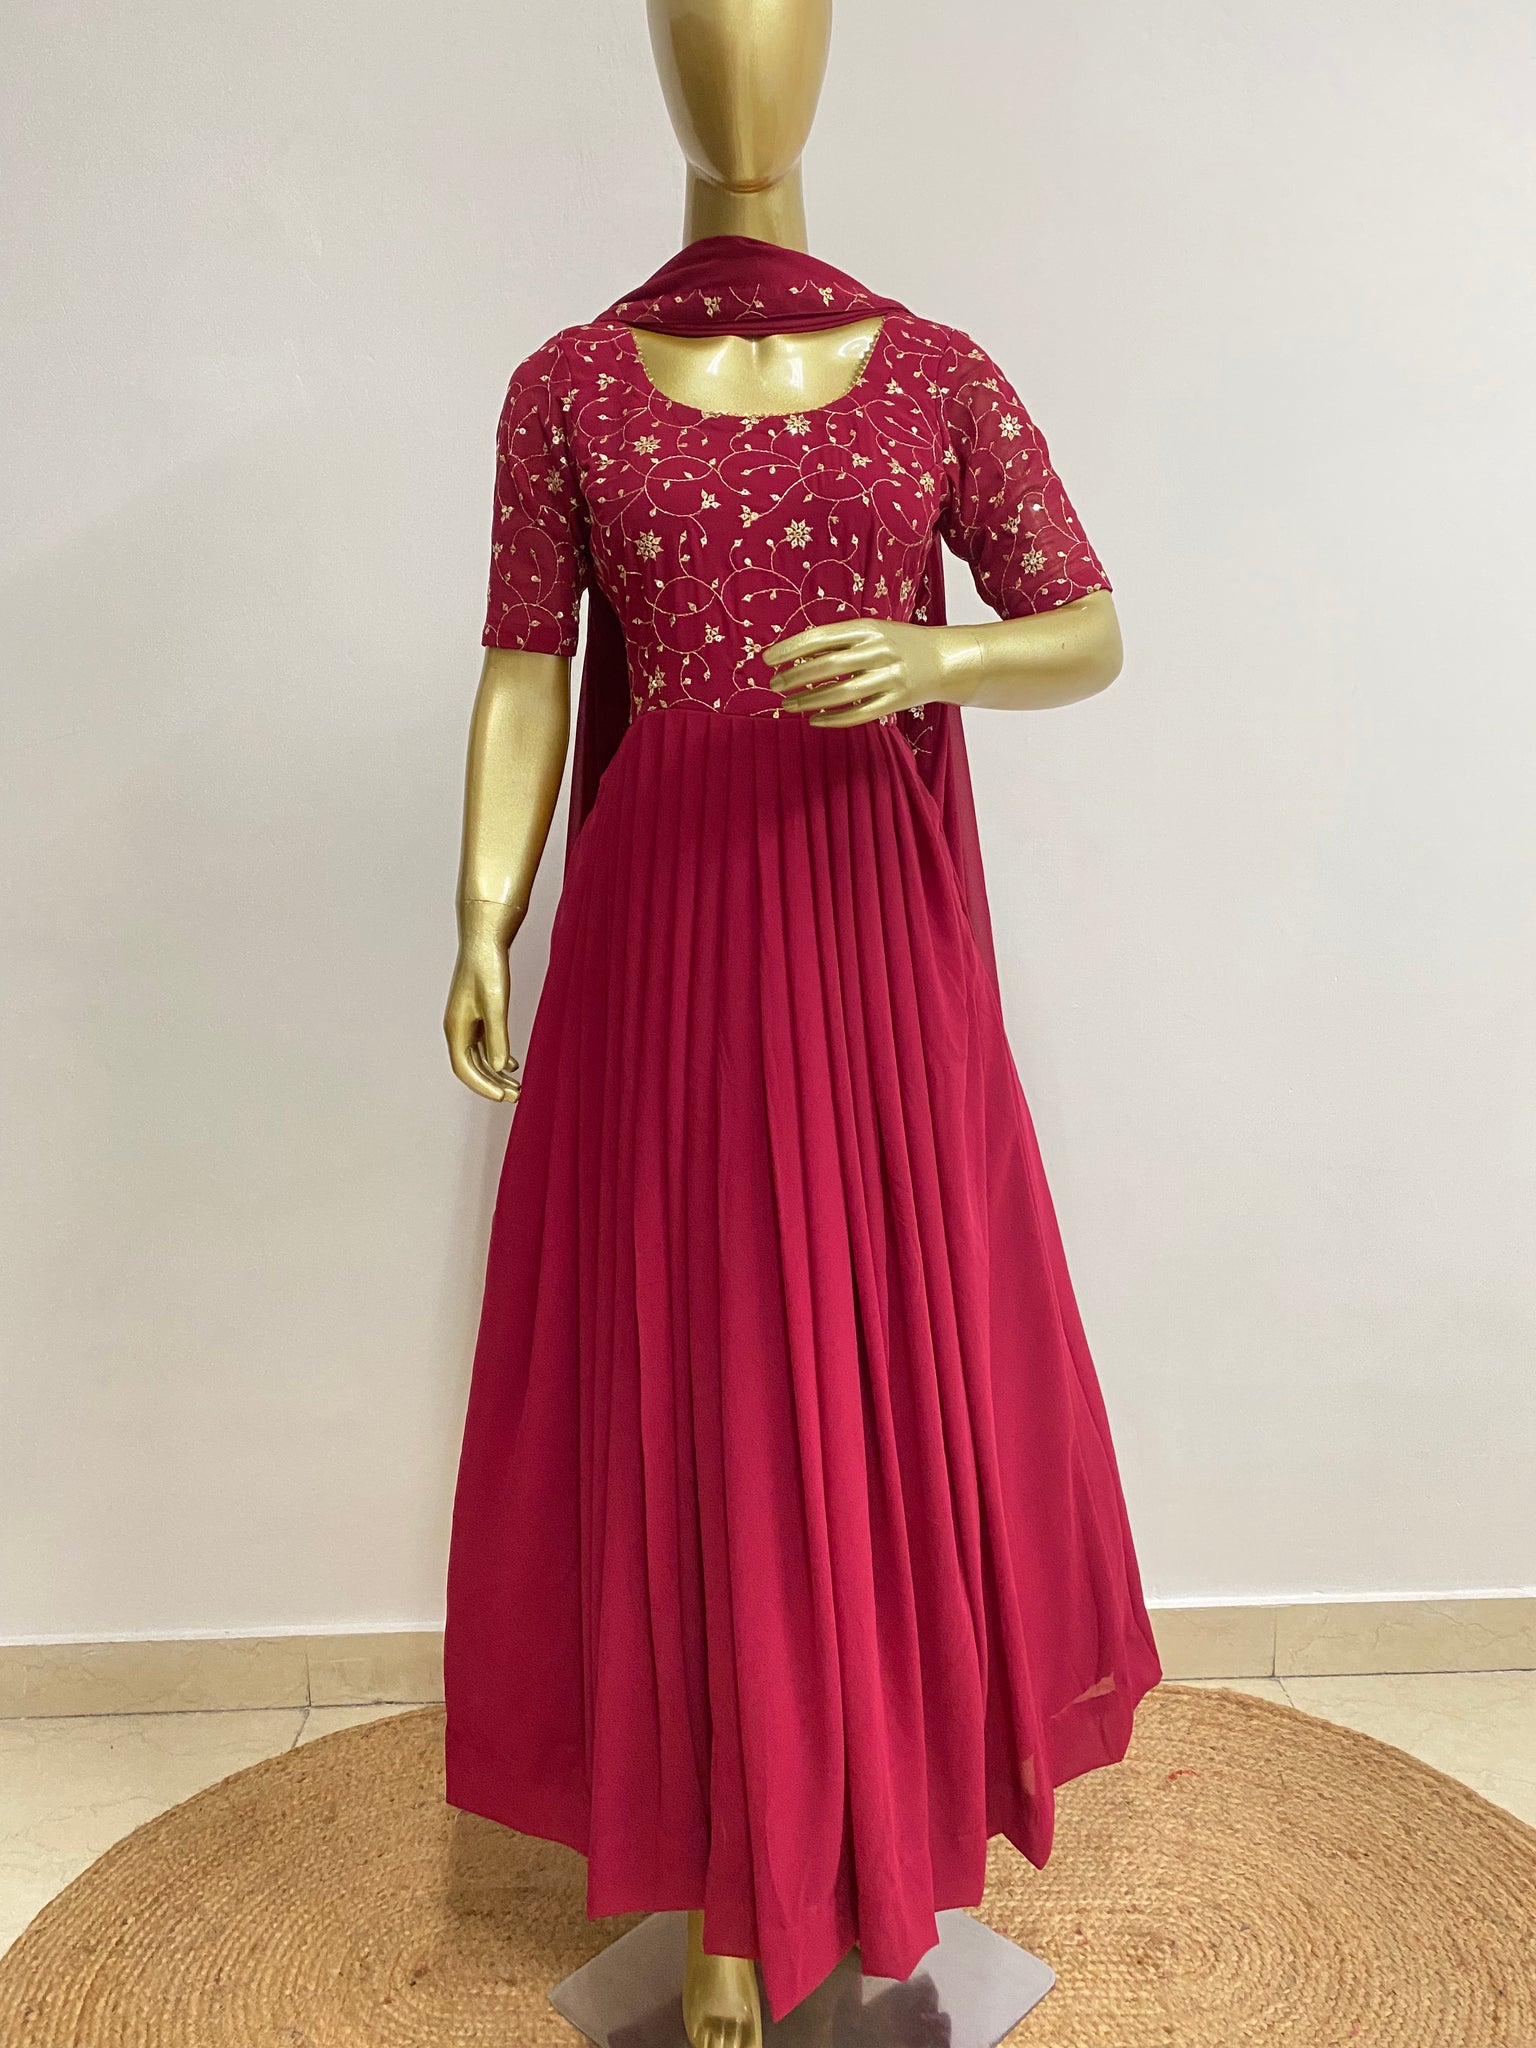 Embroidered burgundy dress